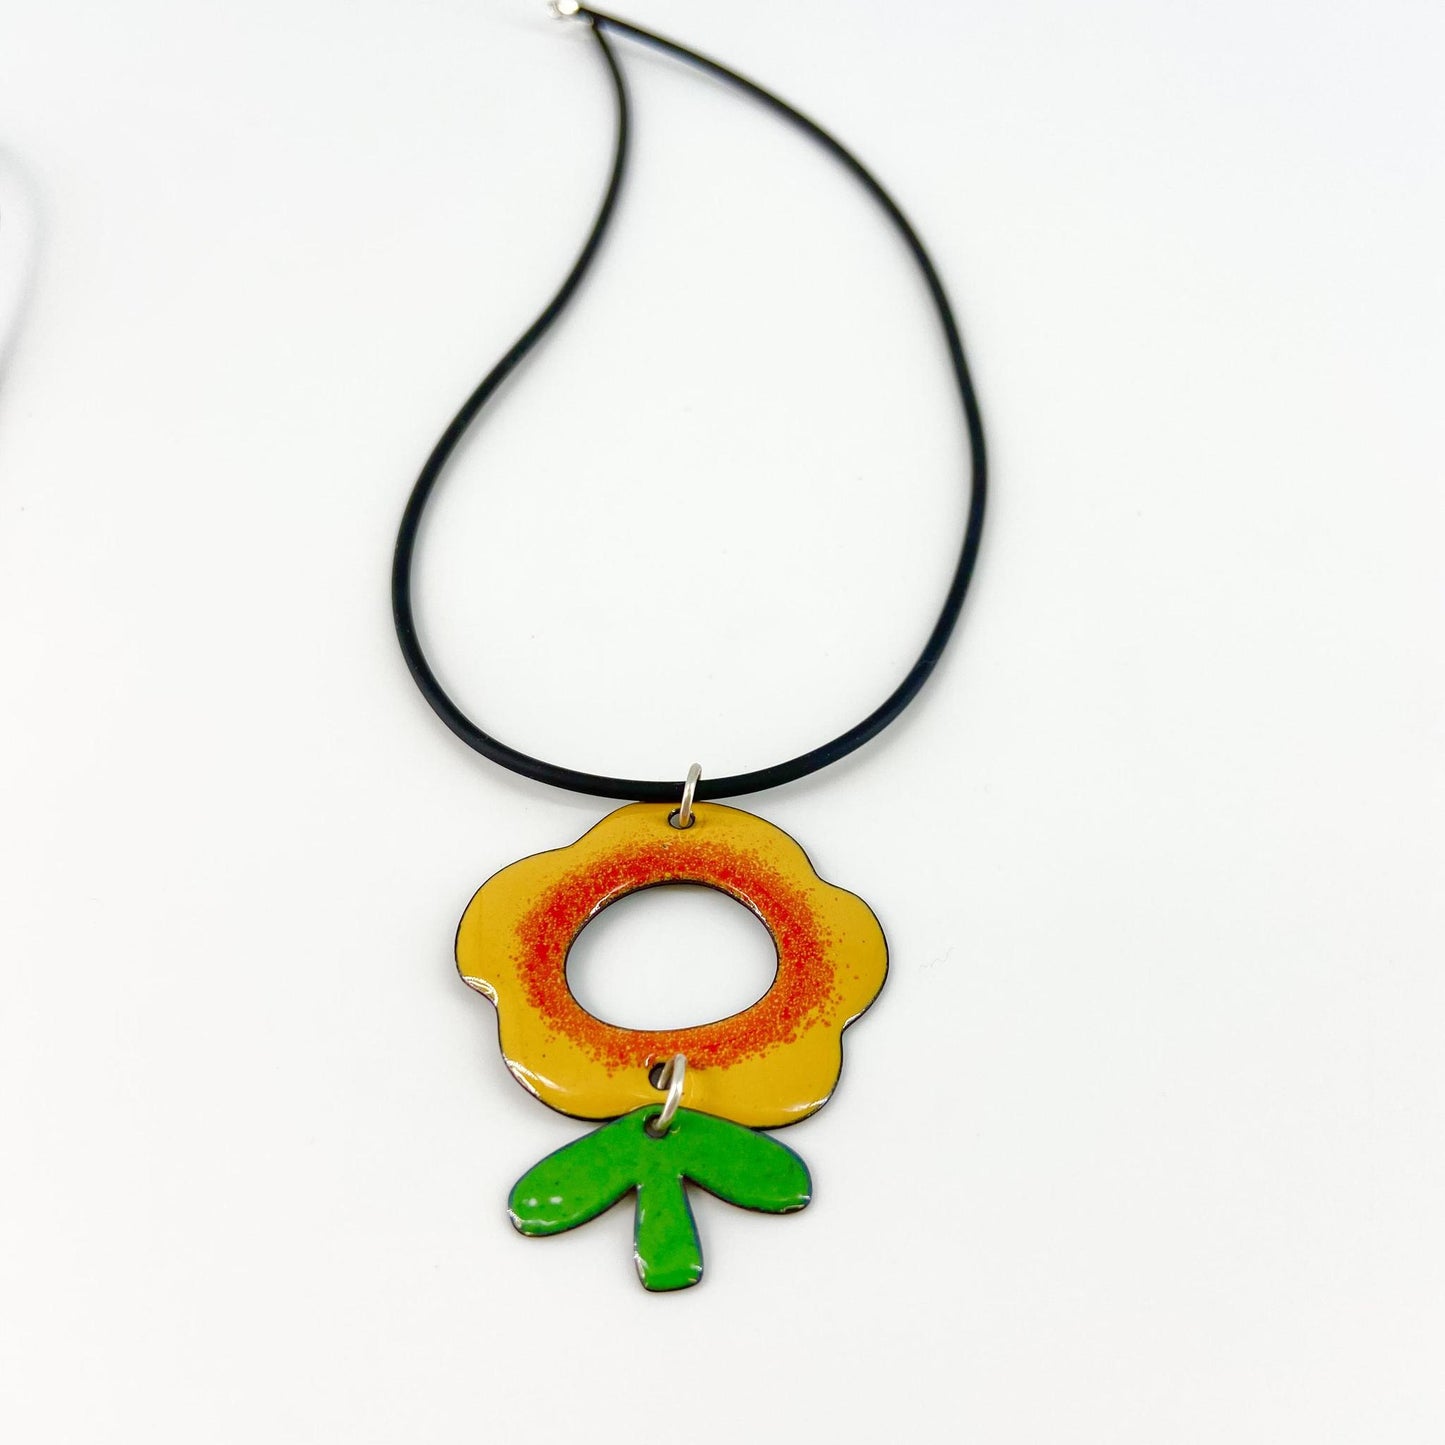 Necklace - Flower & Leaf - Yellow/Orange - Enamel (Video)